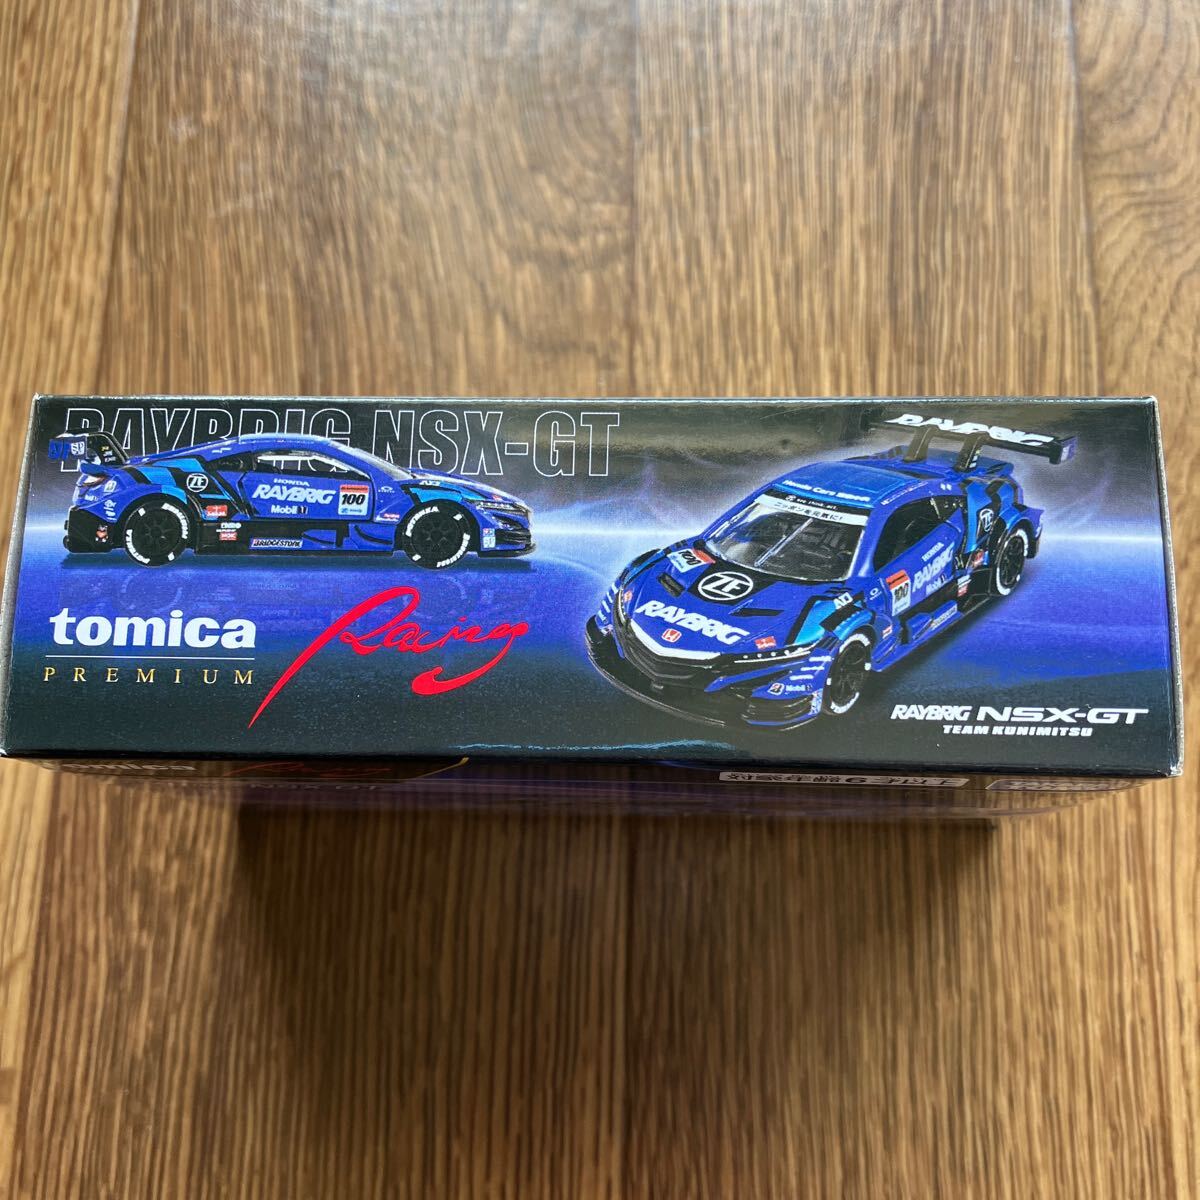 tomica トミカ プレミアム レイブリック NSX-GT Racing スーパーGT 未使用 新品の画像2